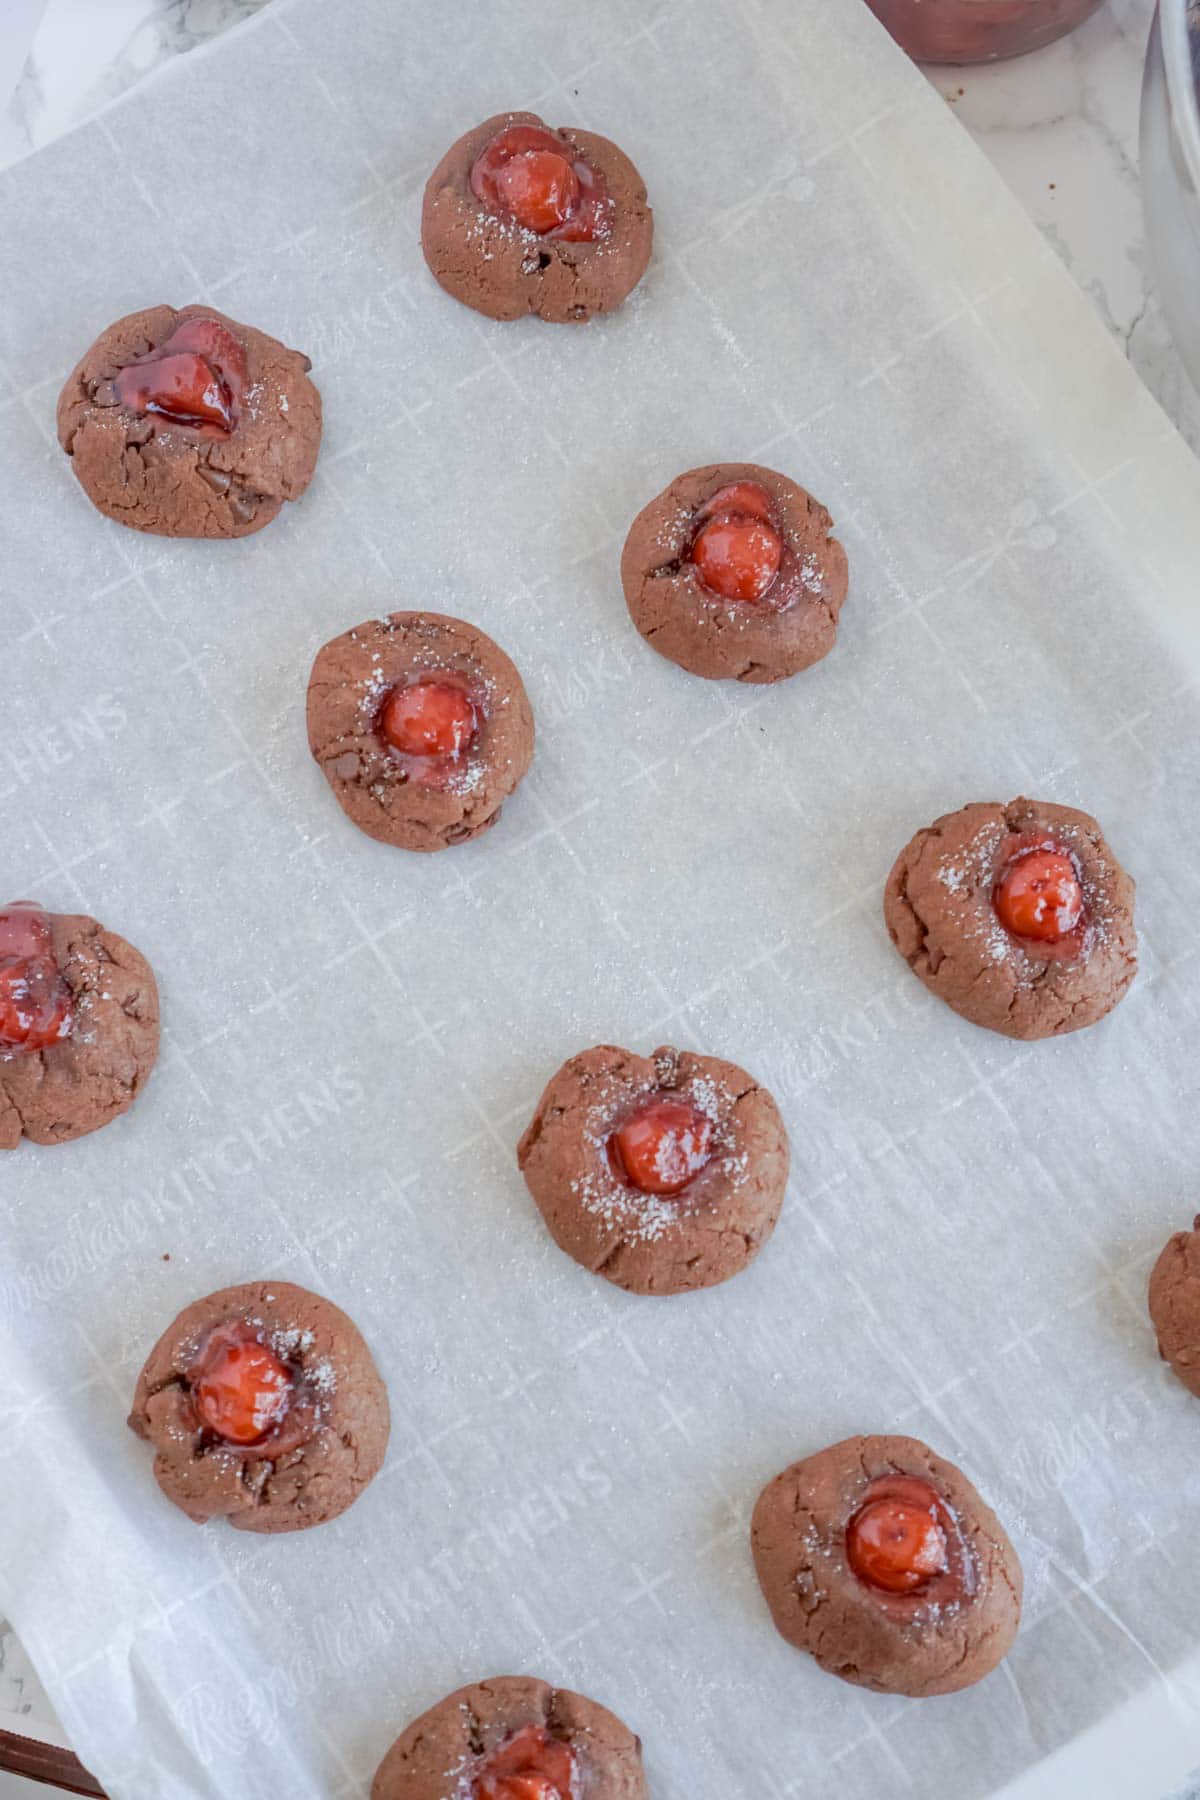 Chocolate thumbprint cookies on a baking sheet